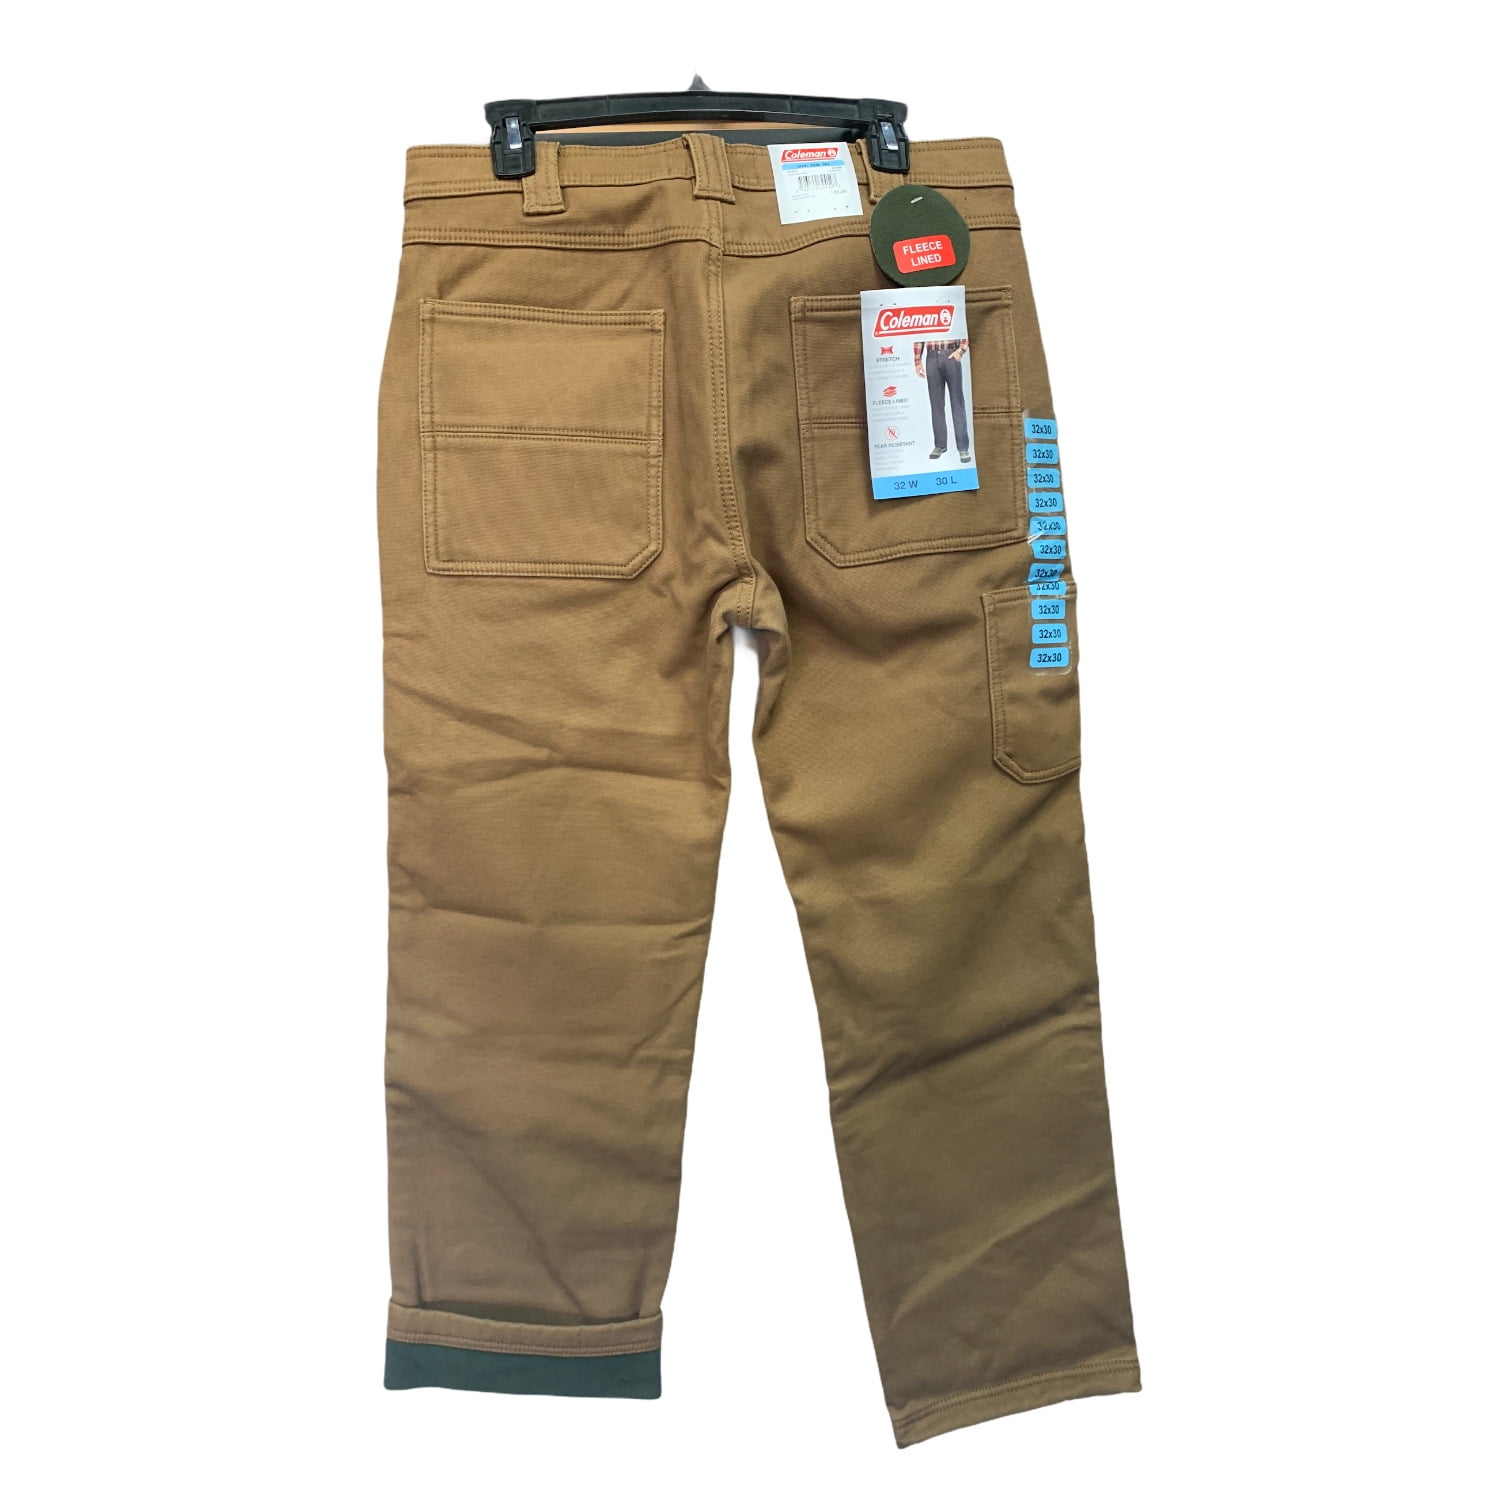 Coleman Fleece Lined Stretch & Tear Resistant Rugged Pants (Caramel, 32x30)  